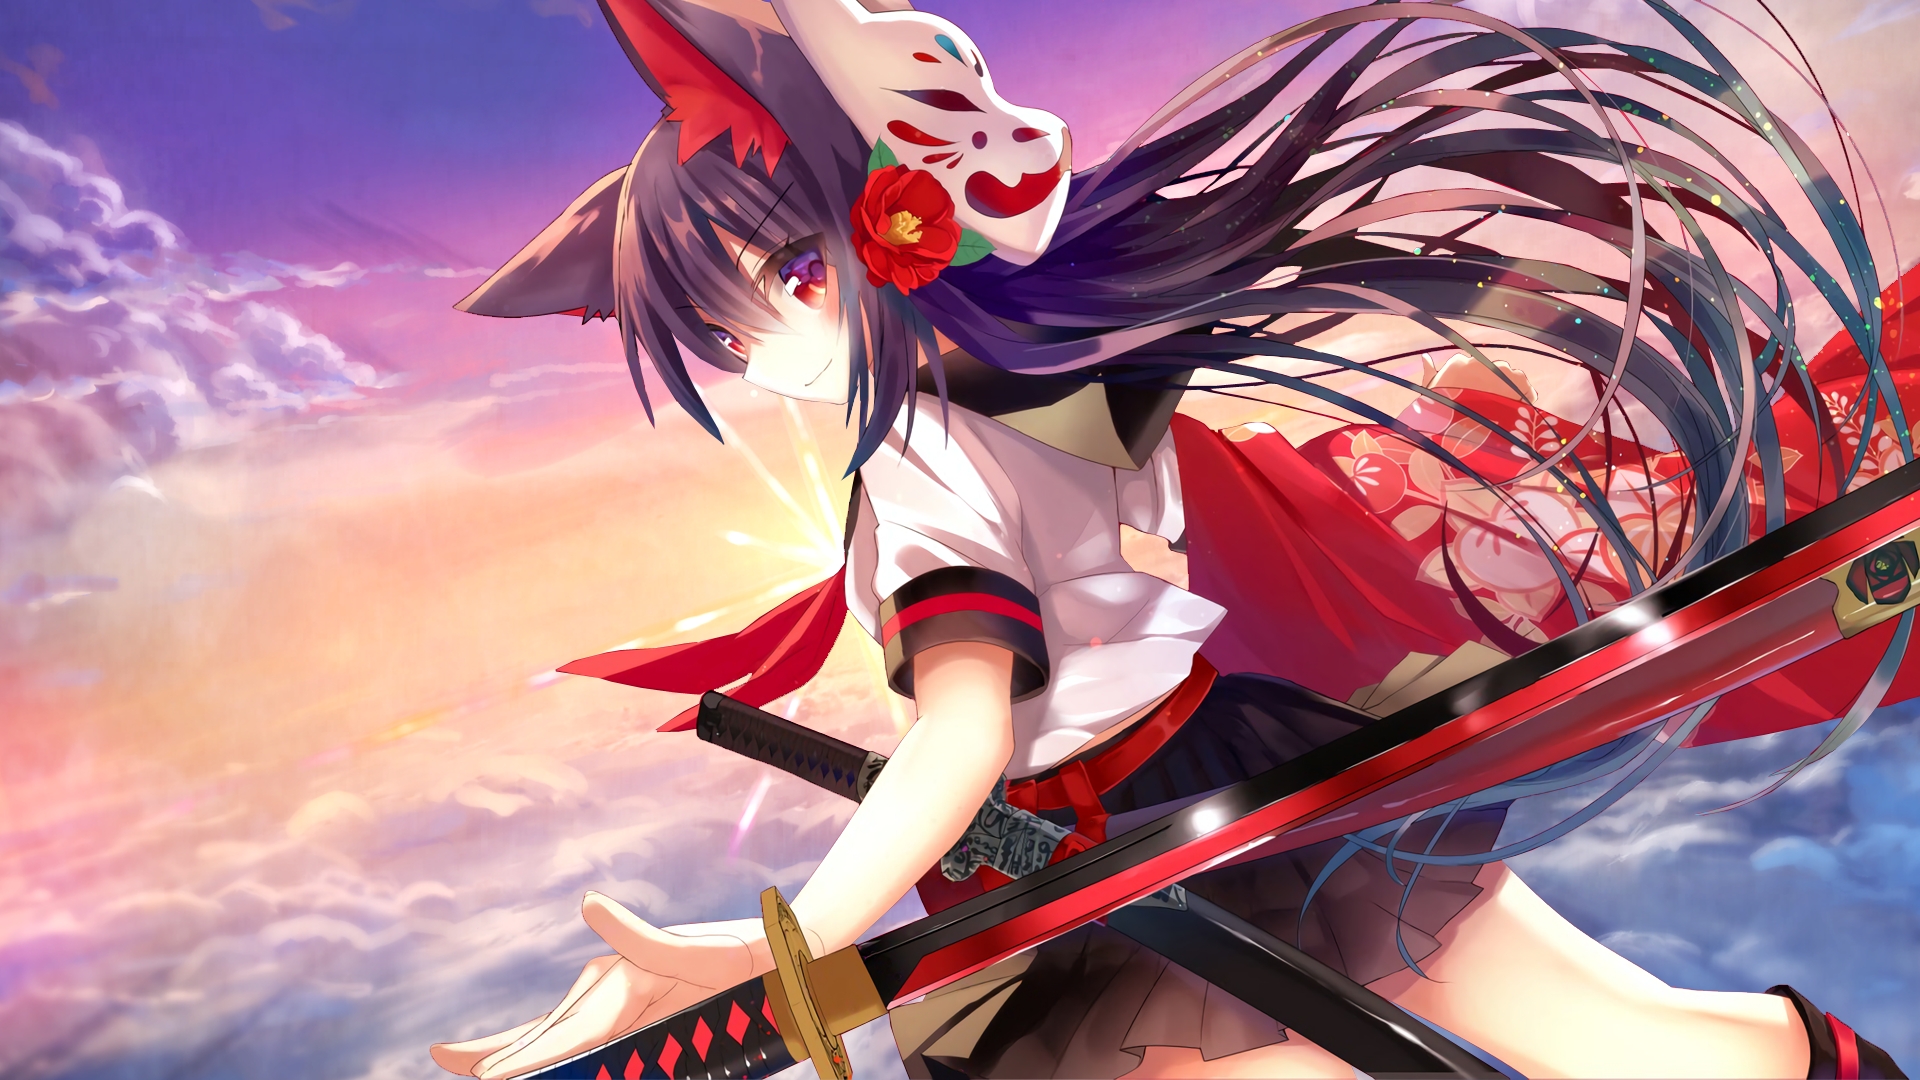 Desktop Wallpaper Long Hair Anime Girl With Katana, Swords, Hd Image,  Picture, Background, 1ktokm